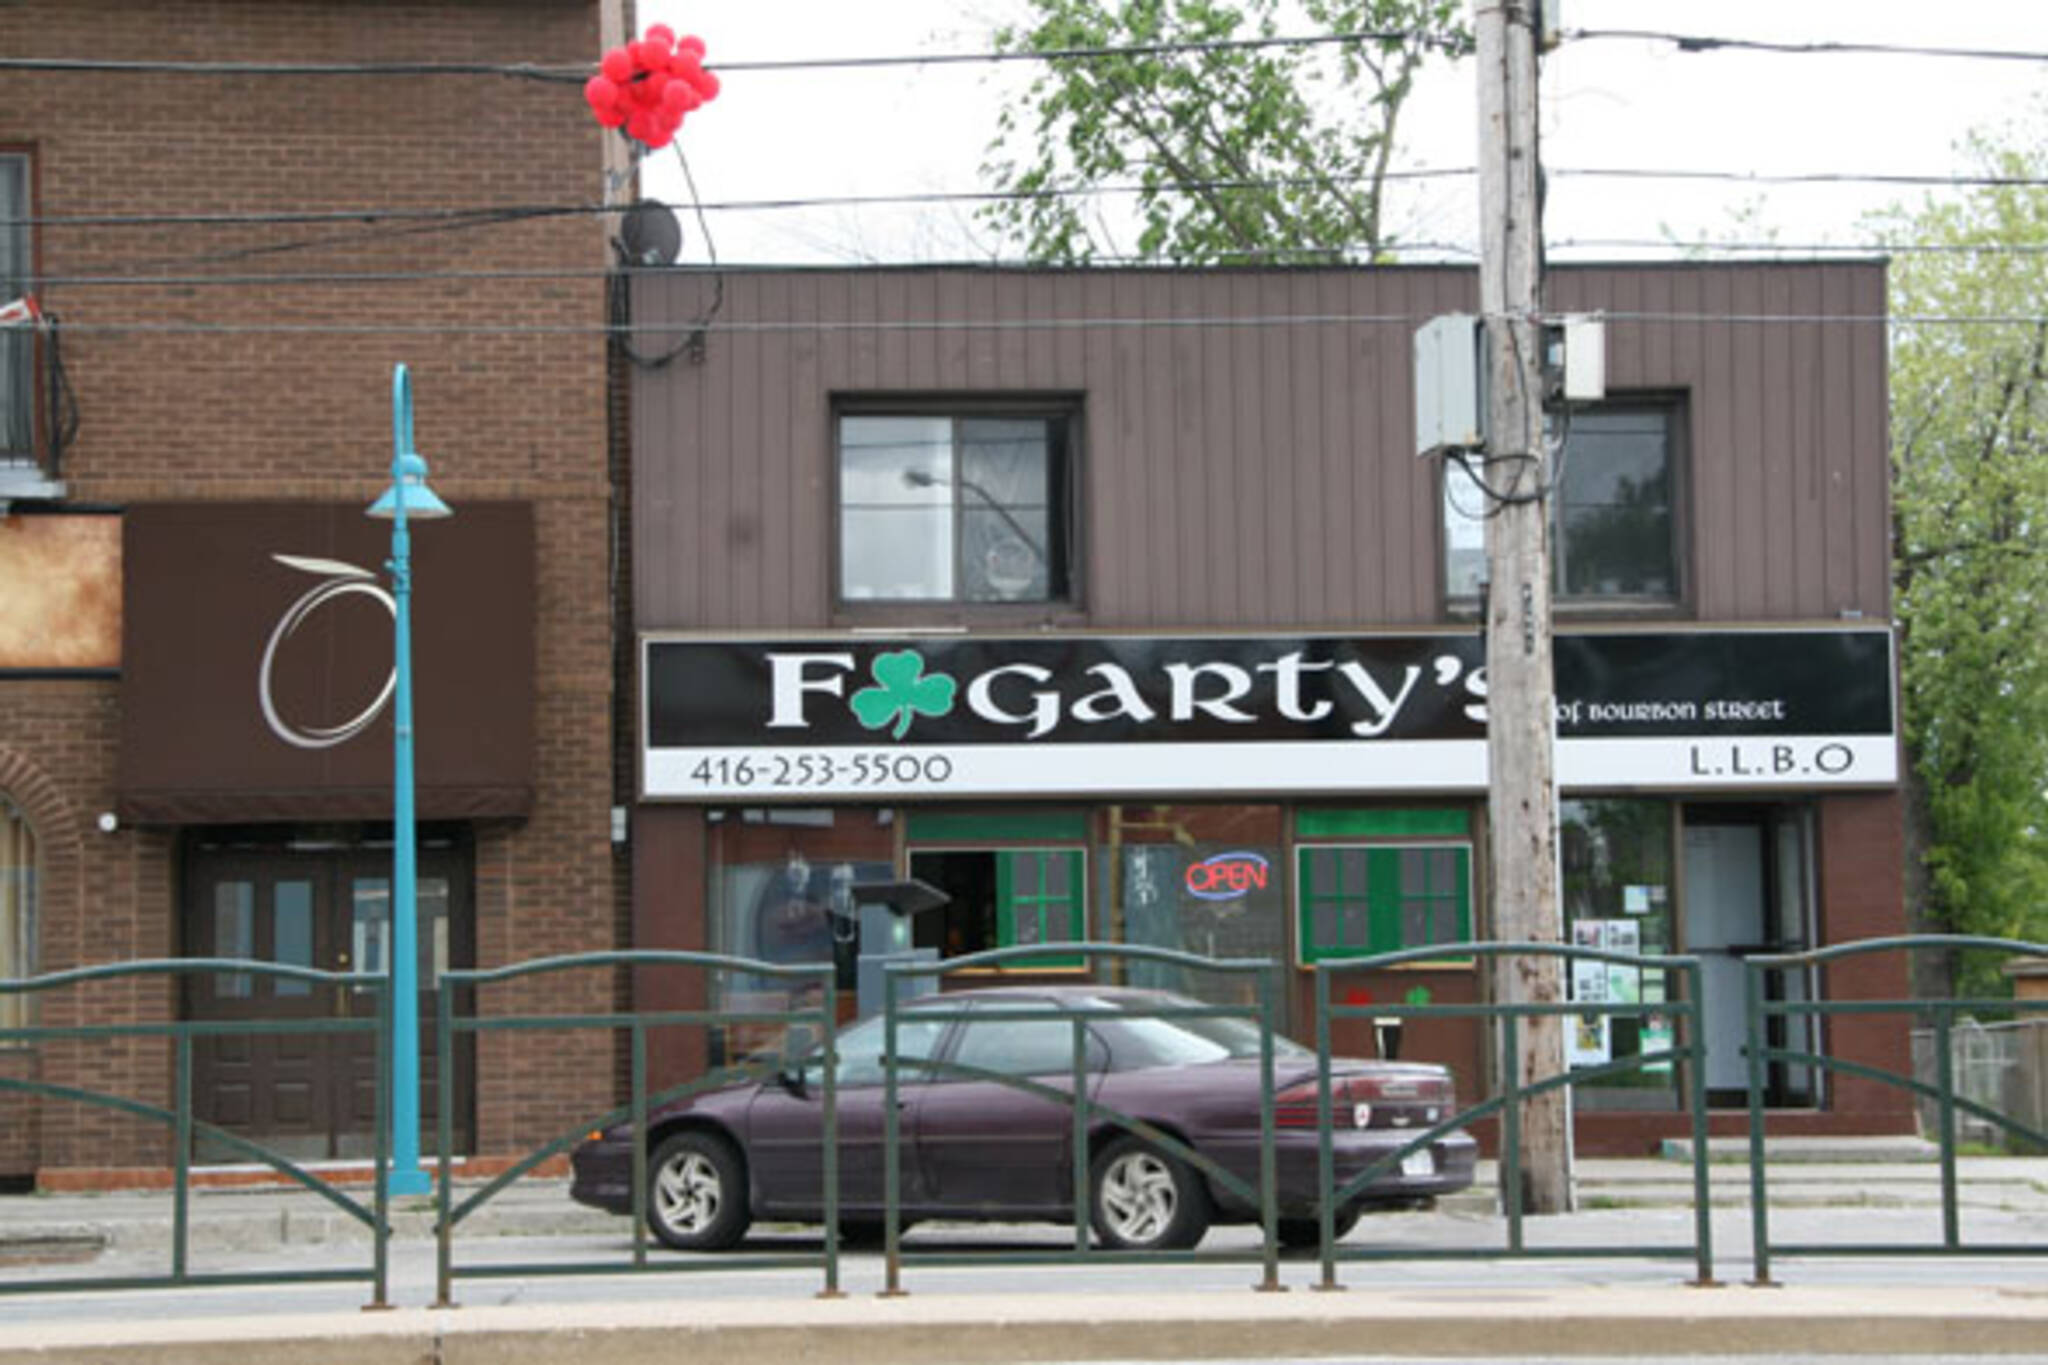 Fogarty's Toronto